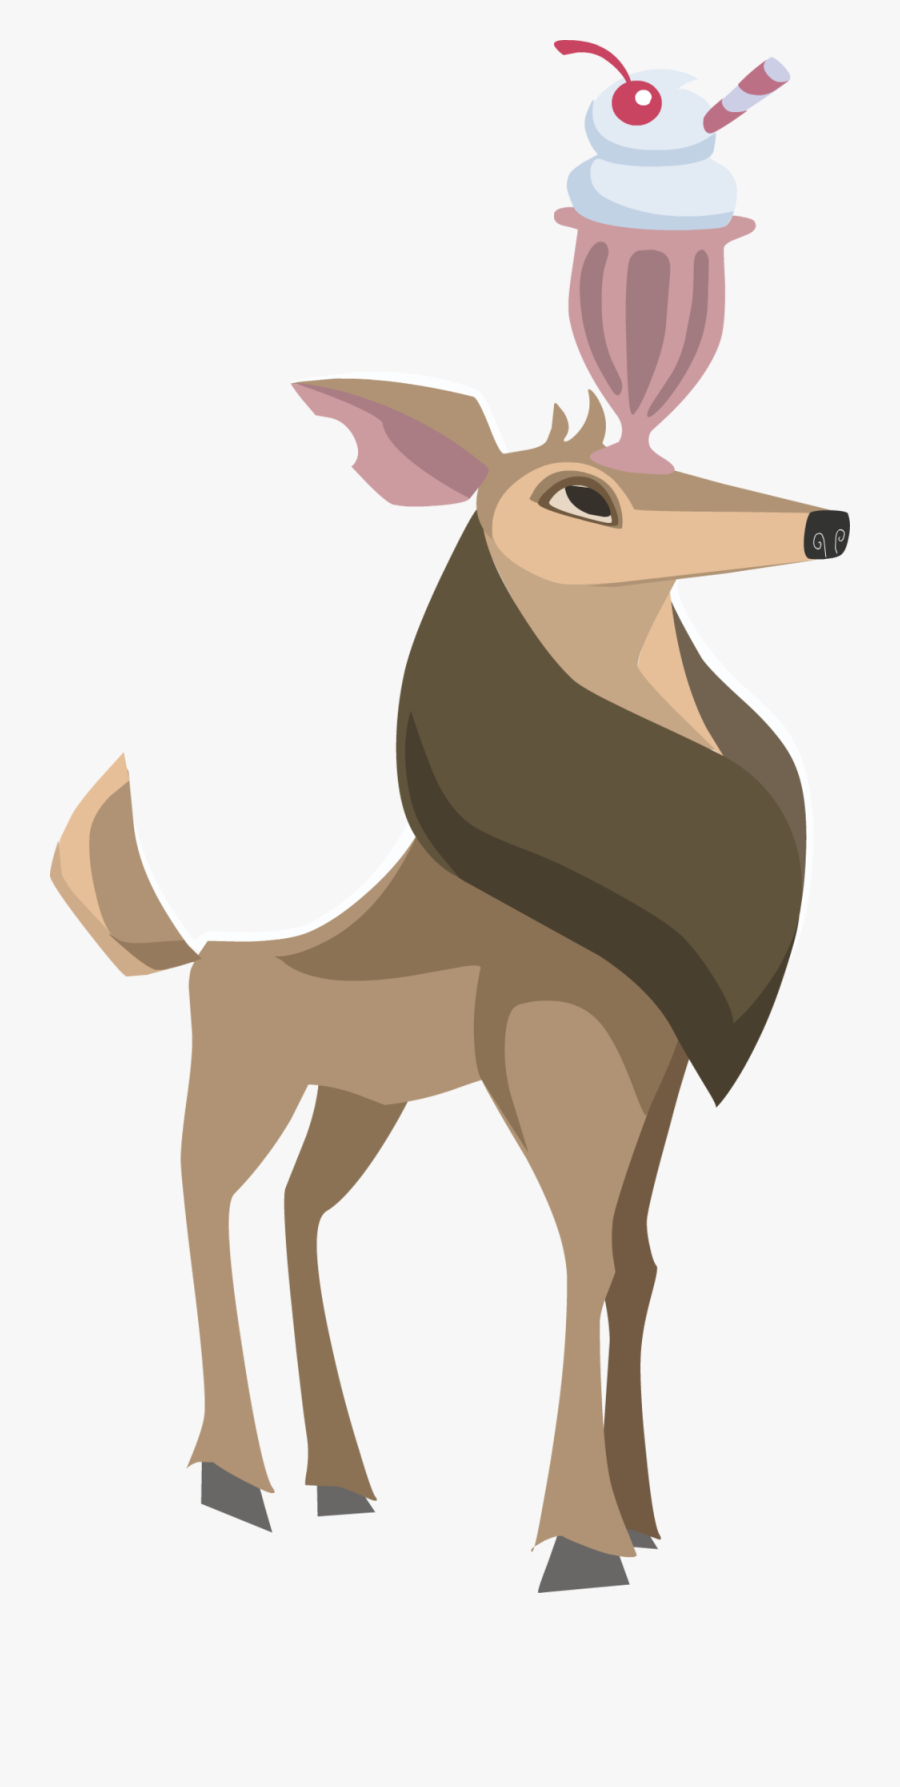 Deer, Transparent Clipart